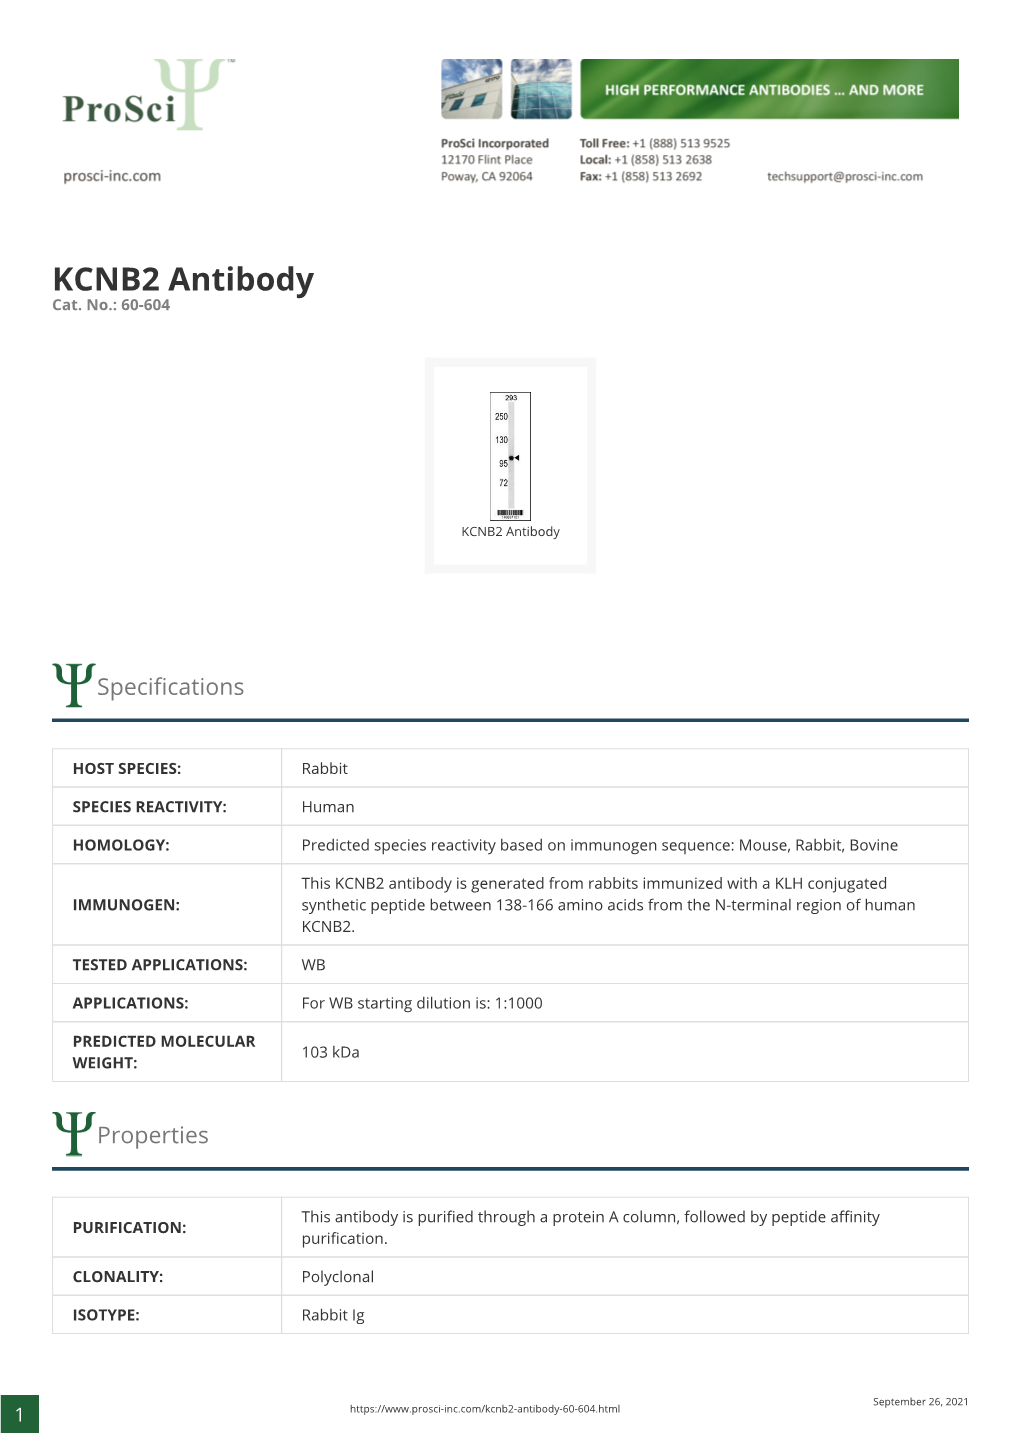 KCNB2 Antibody Cat